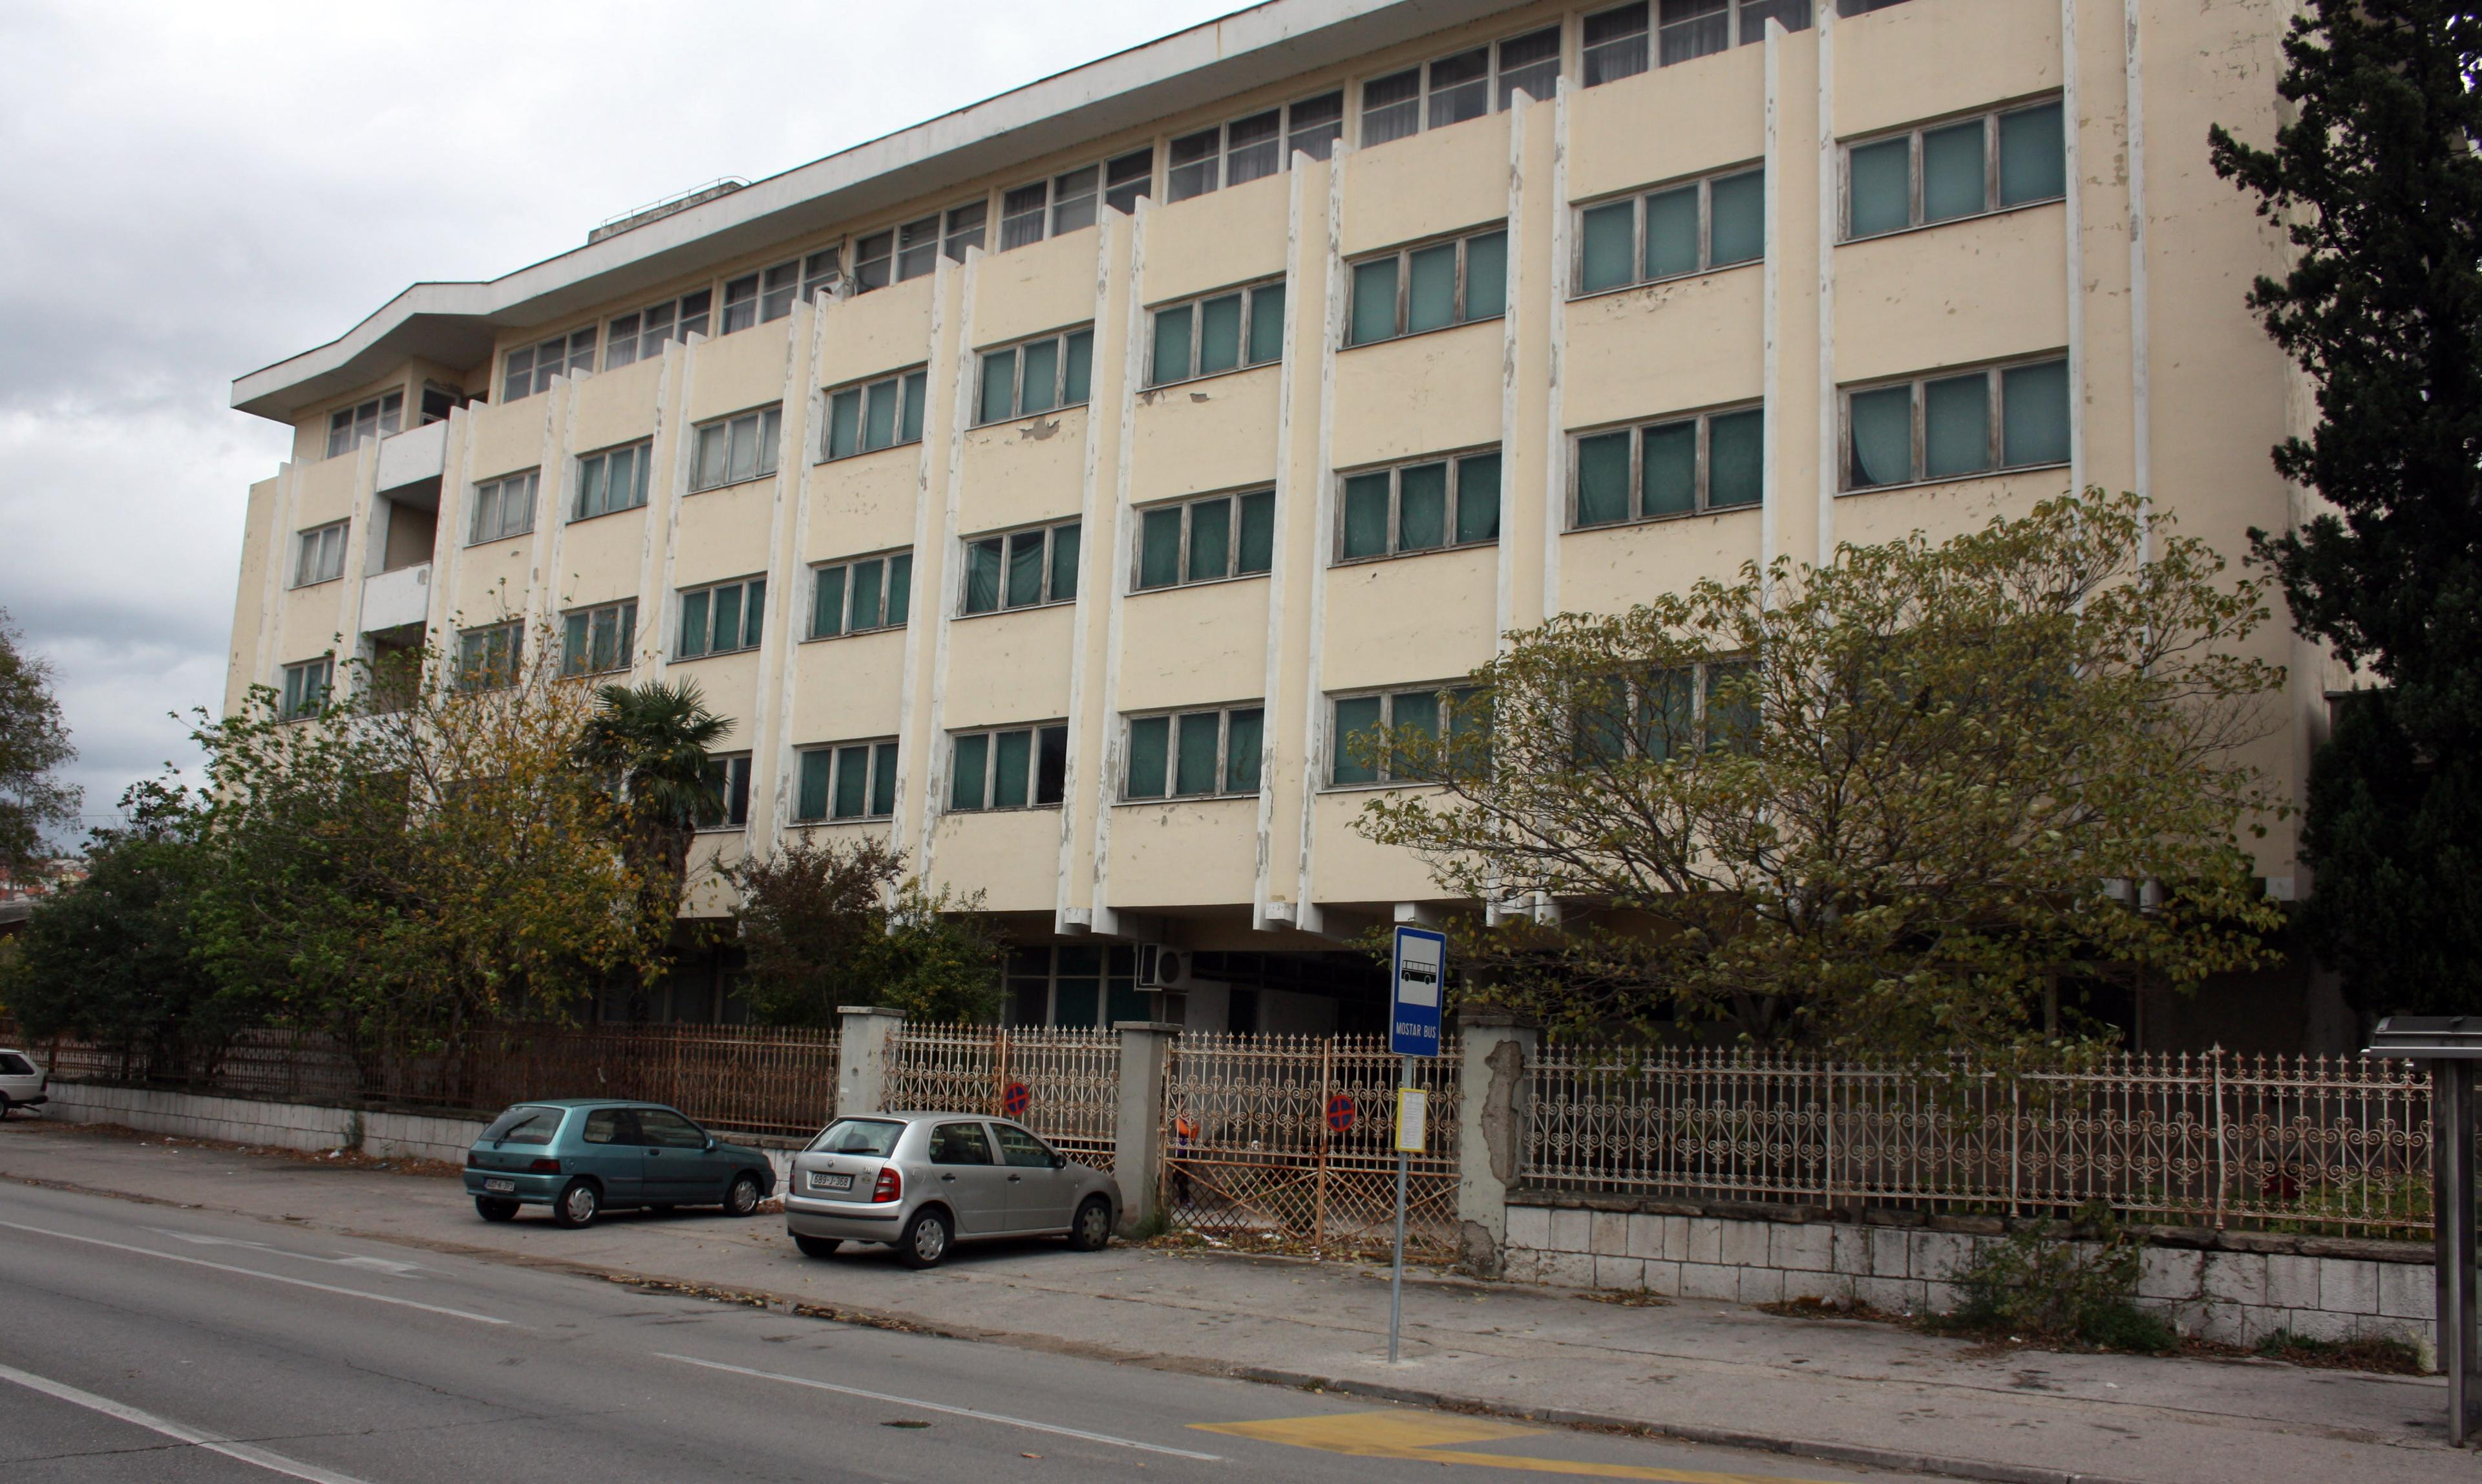 Fabrika duhana Mostar prodata za 5 miliona KM - Avaz